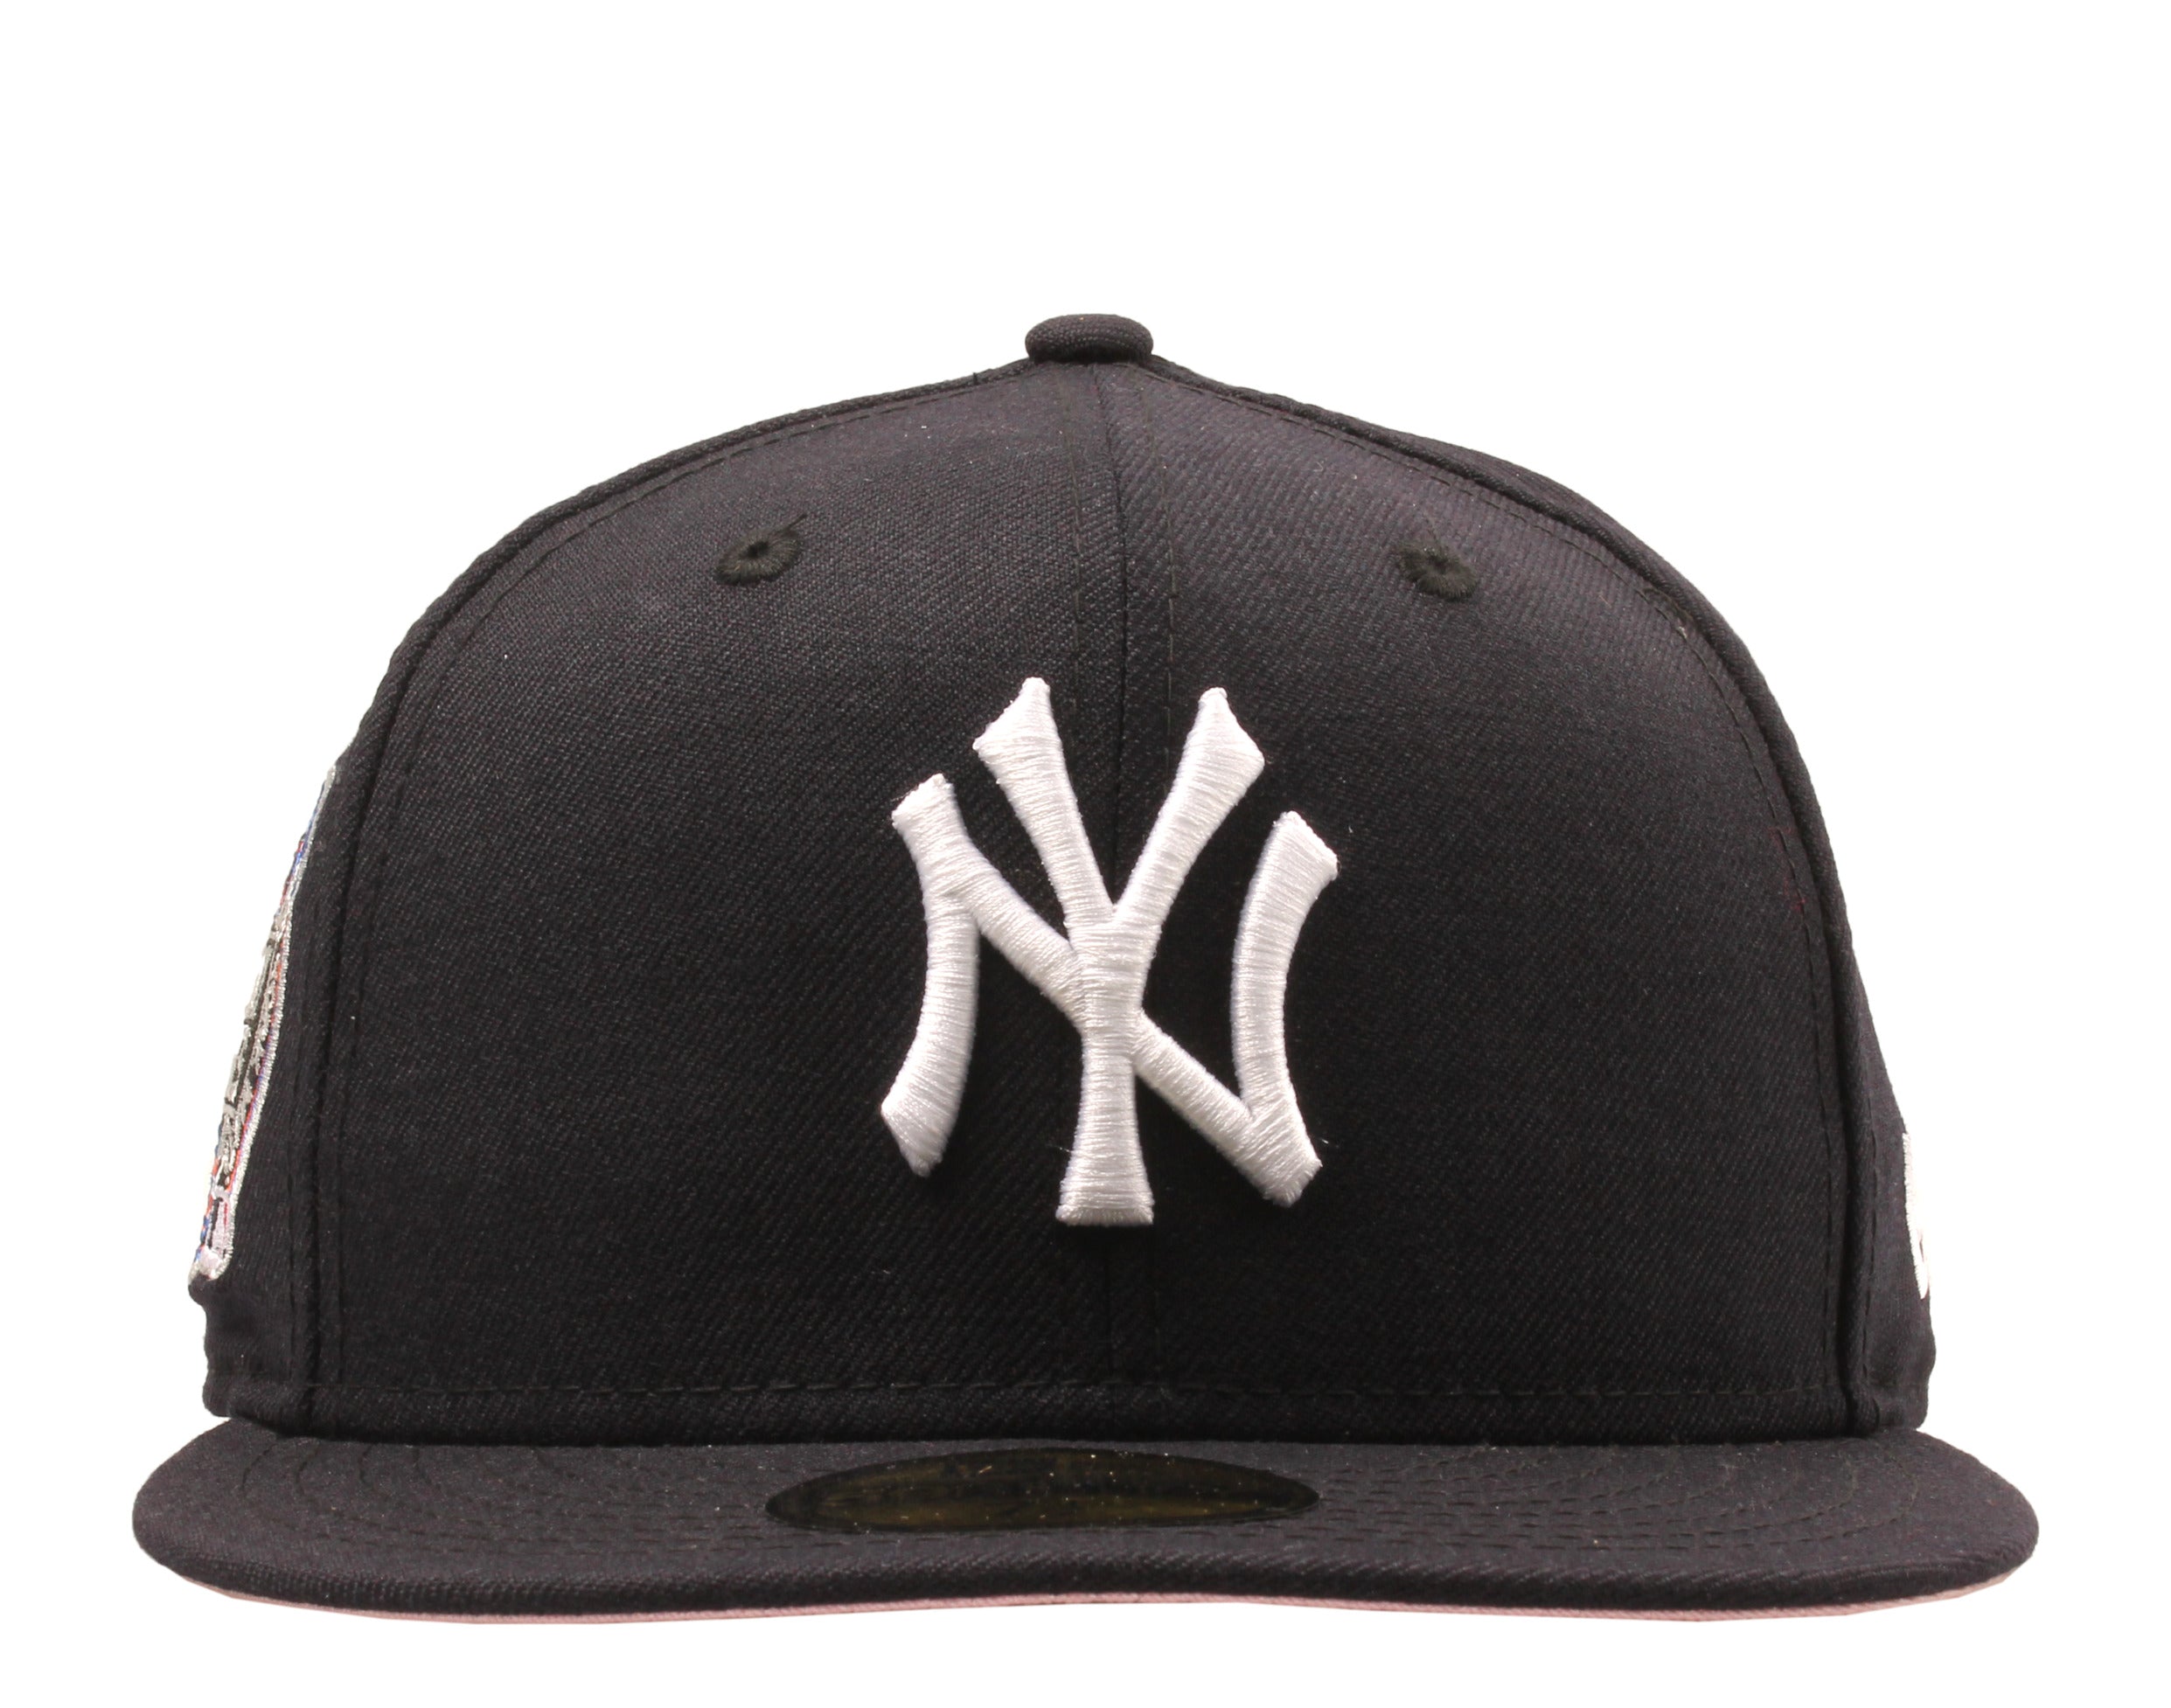 Pink Monogram NY Cap | New York City Smart Hat w/ Velcro Strap | NYC Hat